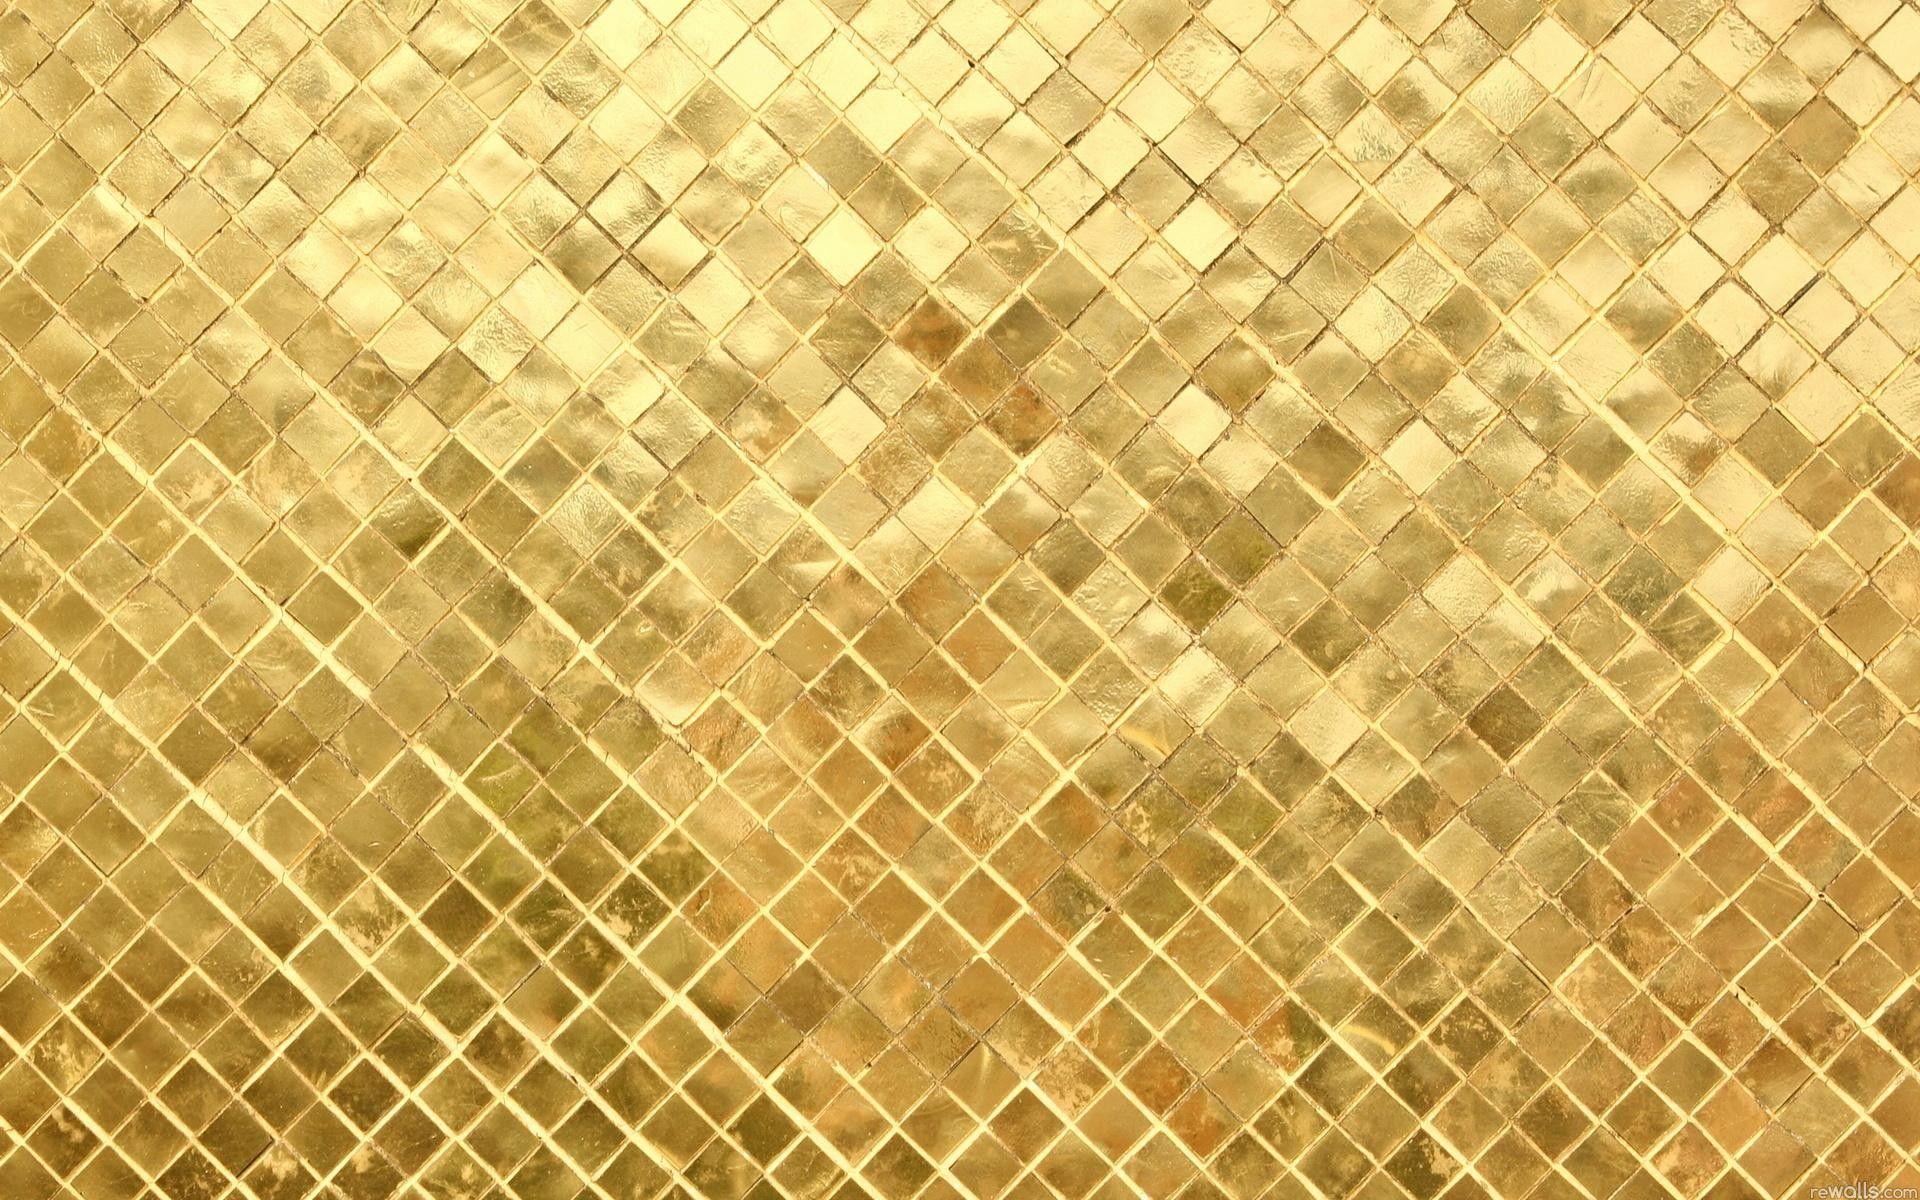 Gold Glitter backgroundDownload free beautiful wallpaper